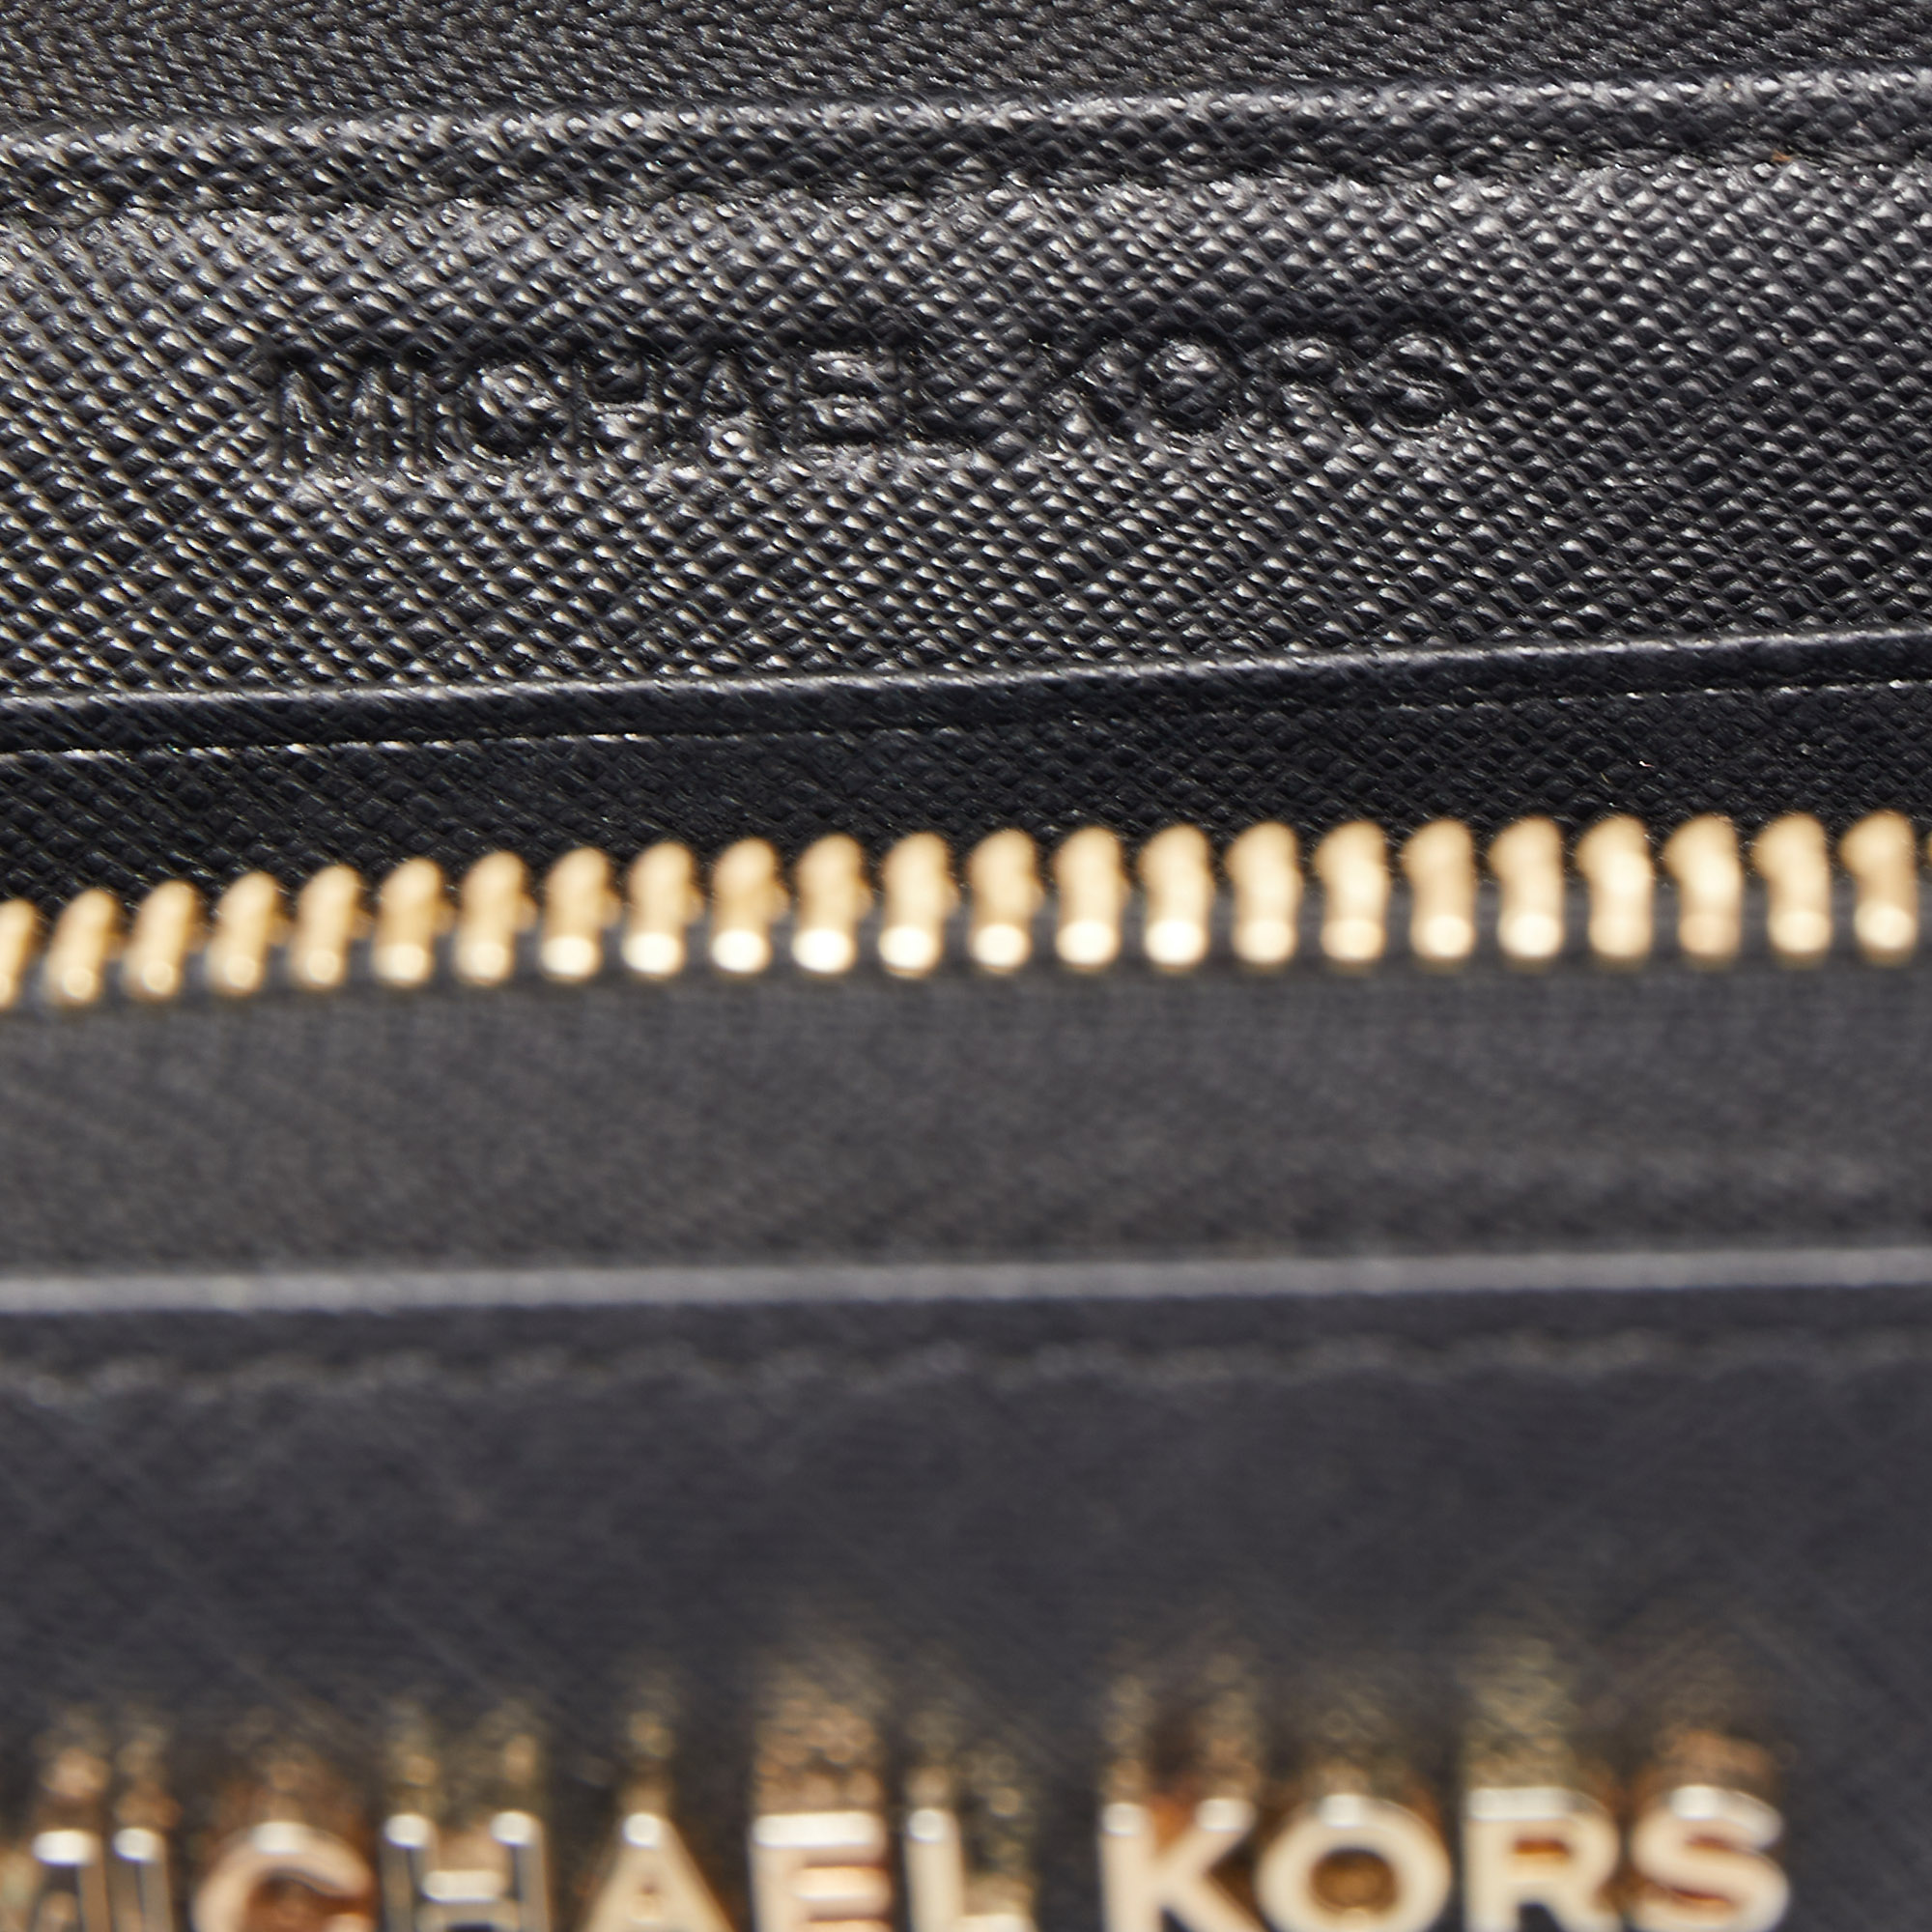 Michael Kors Black Leather Bedford Zip Around Wallet